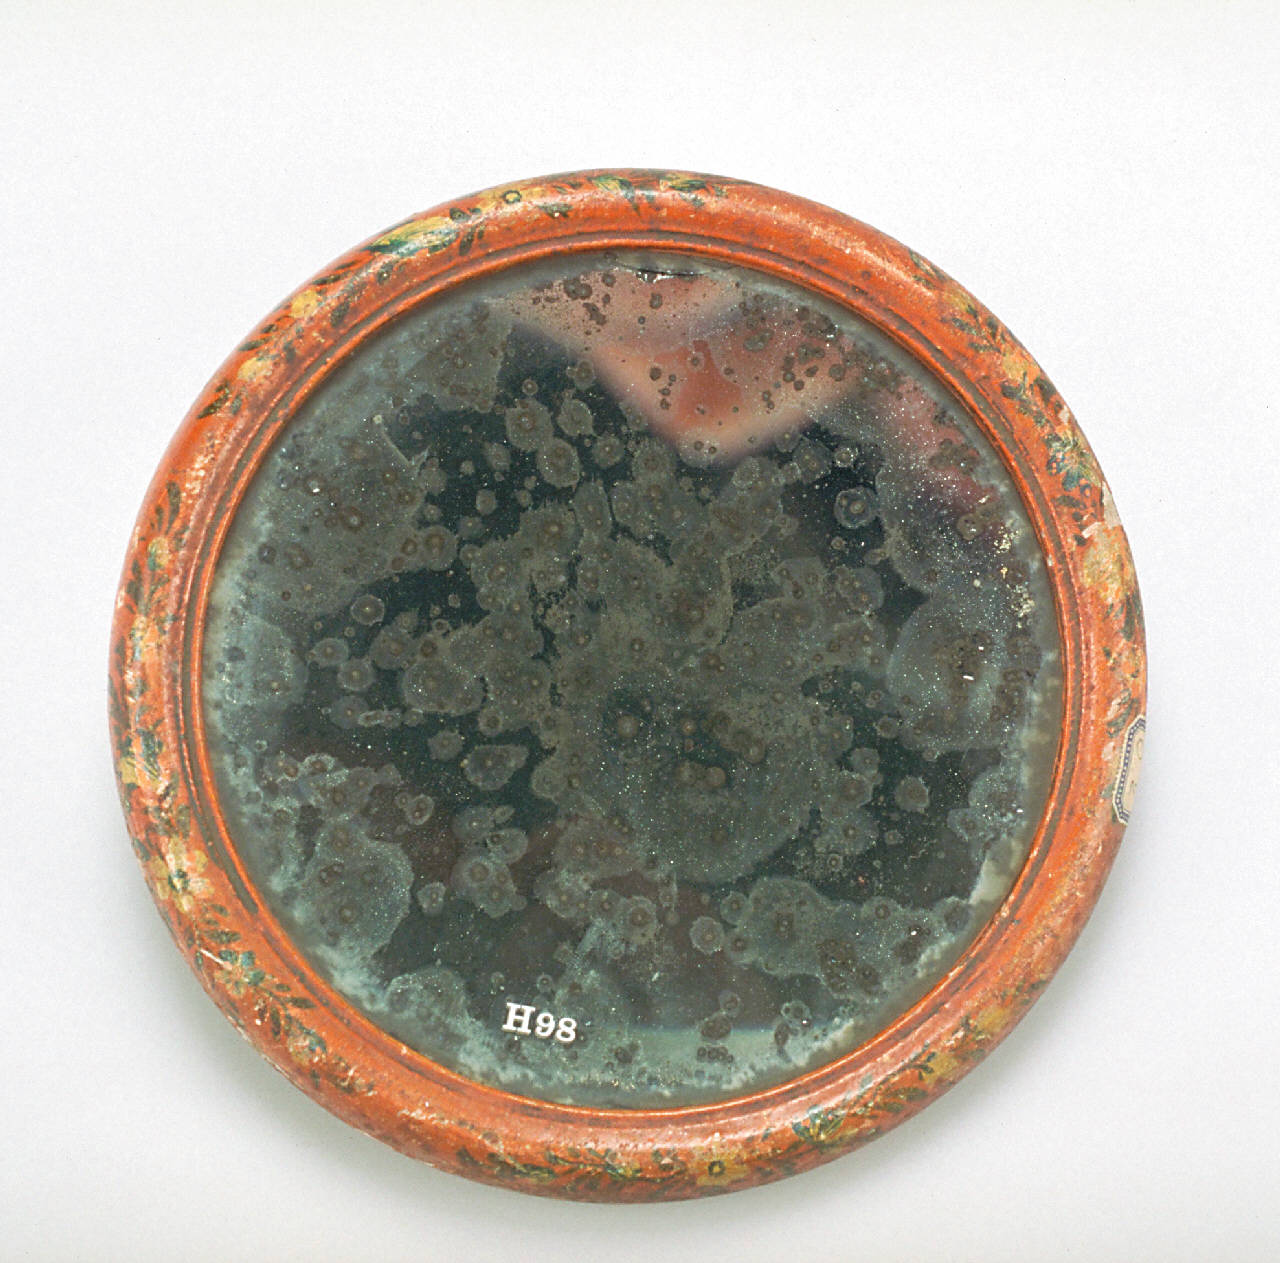 Specchio concavo di vetro amalgamato (fine sec. XVIII)